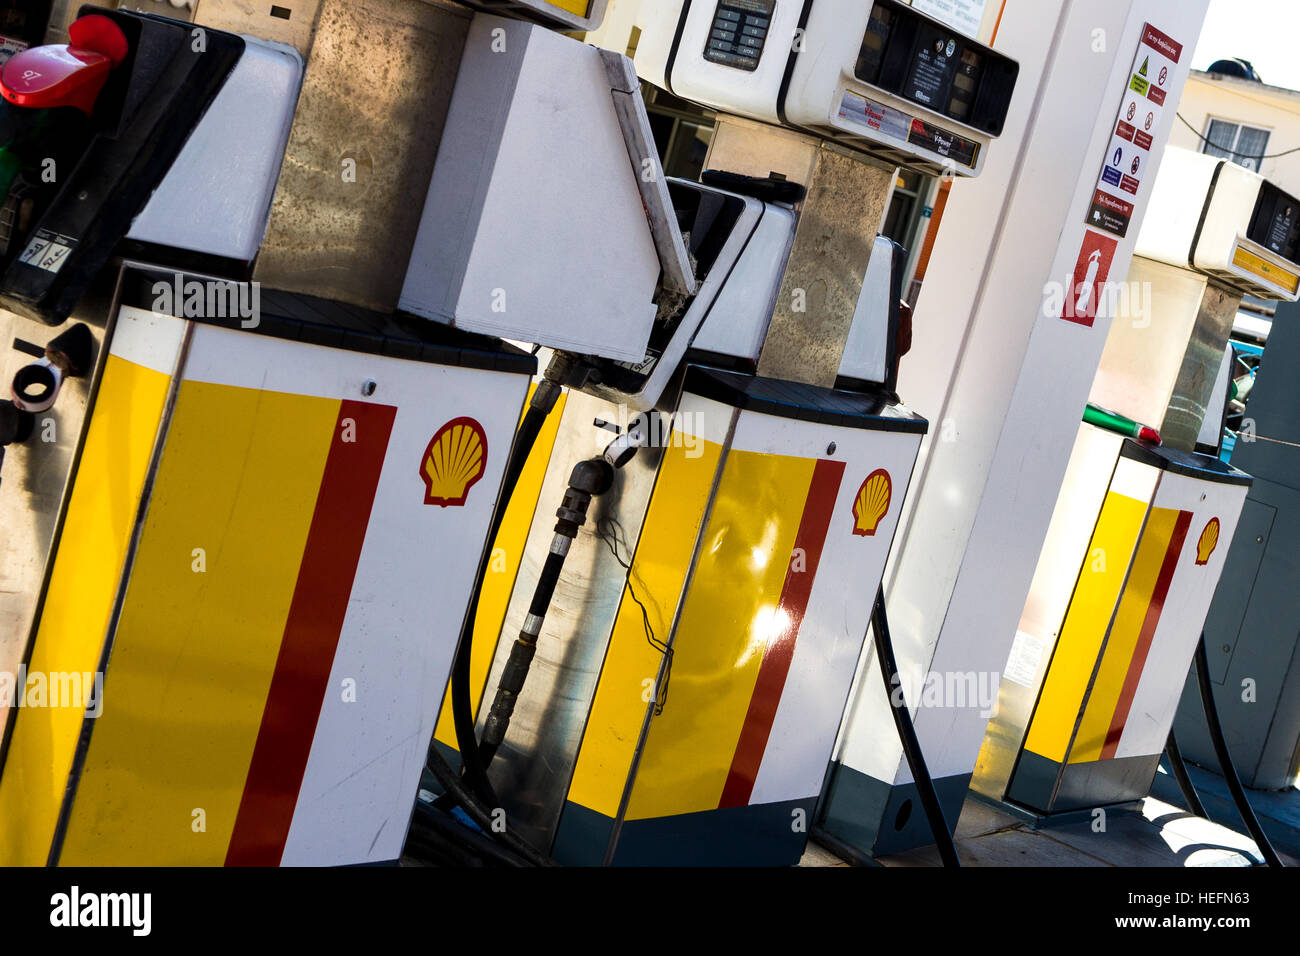 Shell Tankstelle Pumpen. Cephalonia Hafen Griechenland Stockfoto